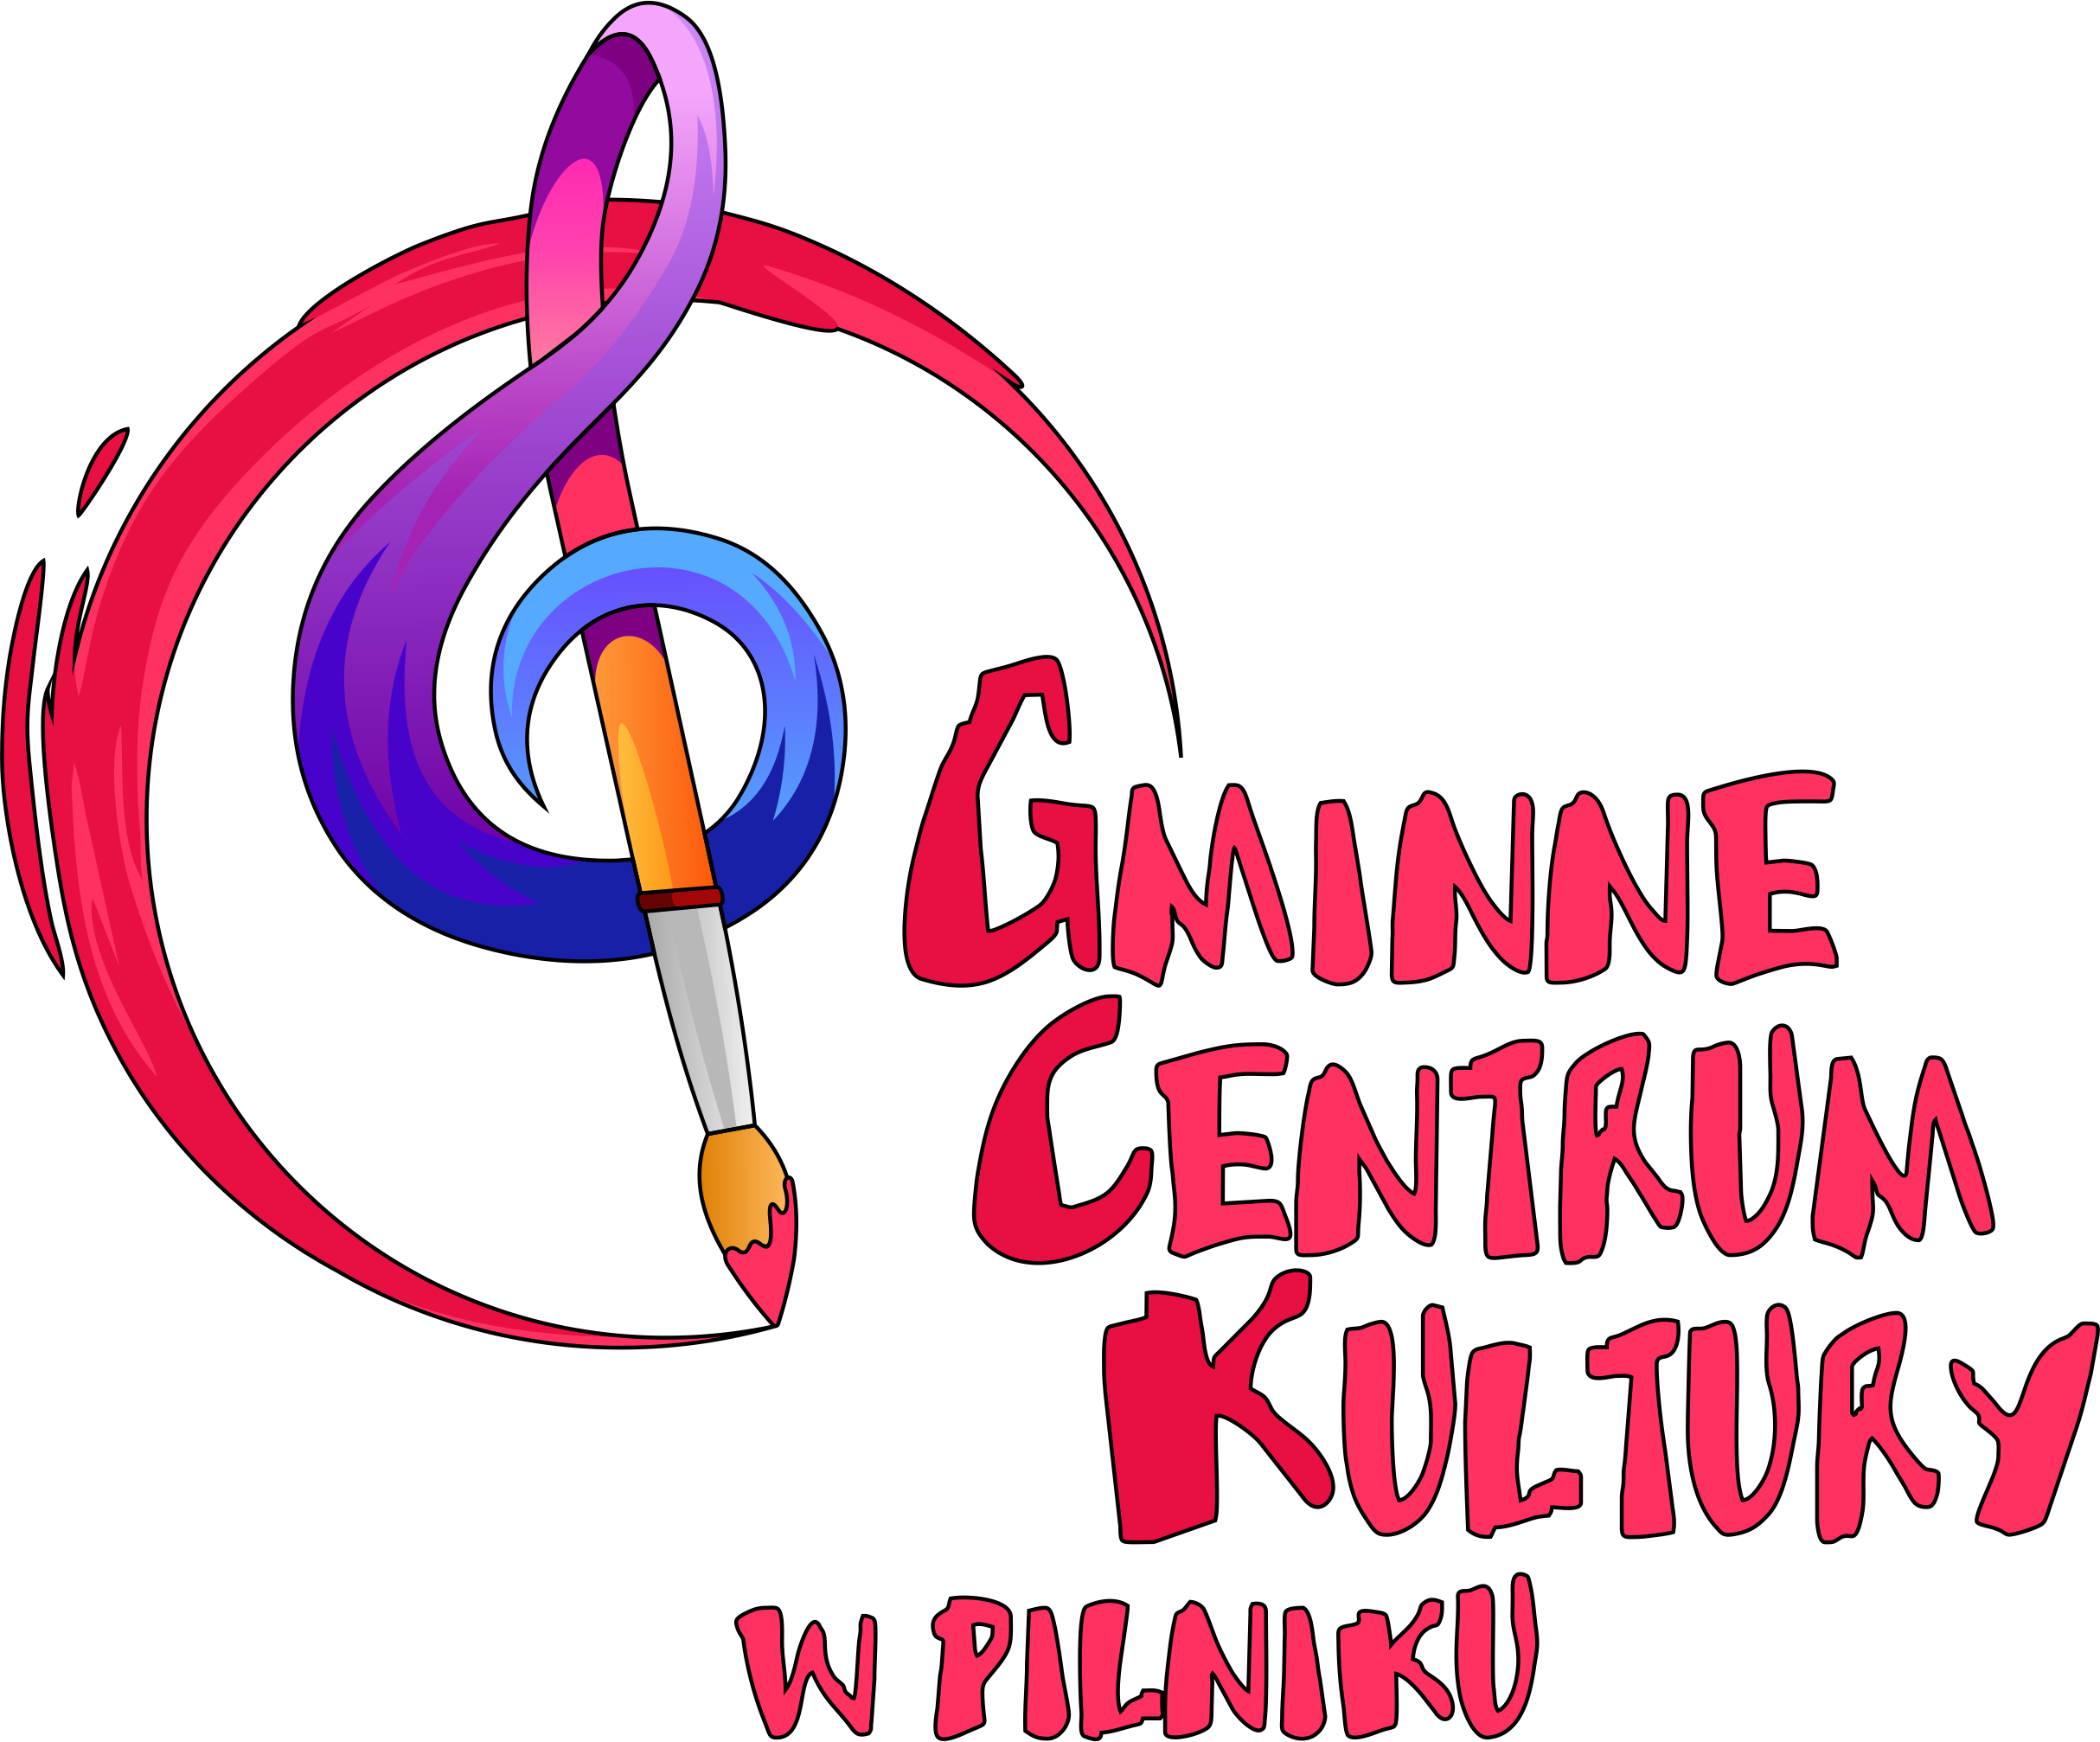 Logo GCKwP